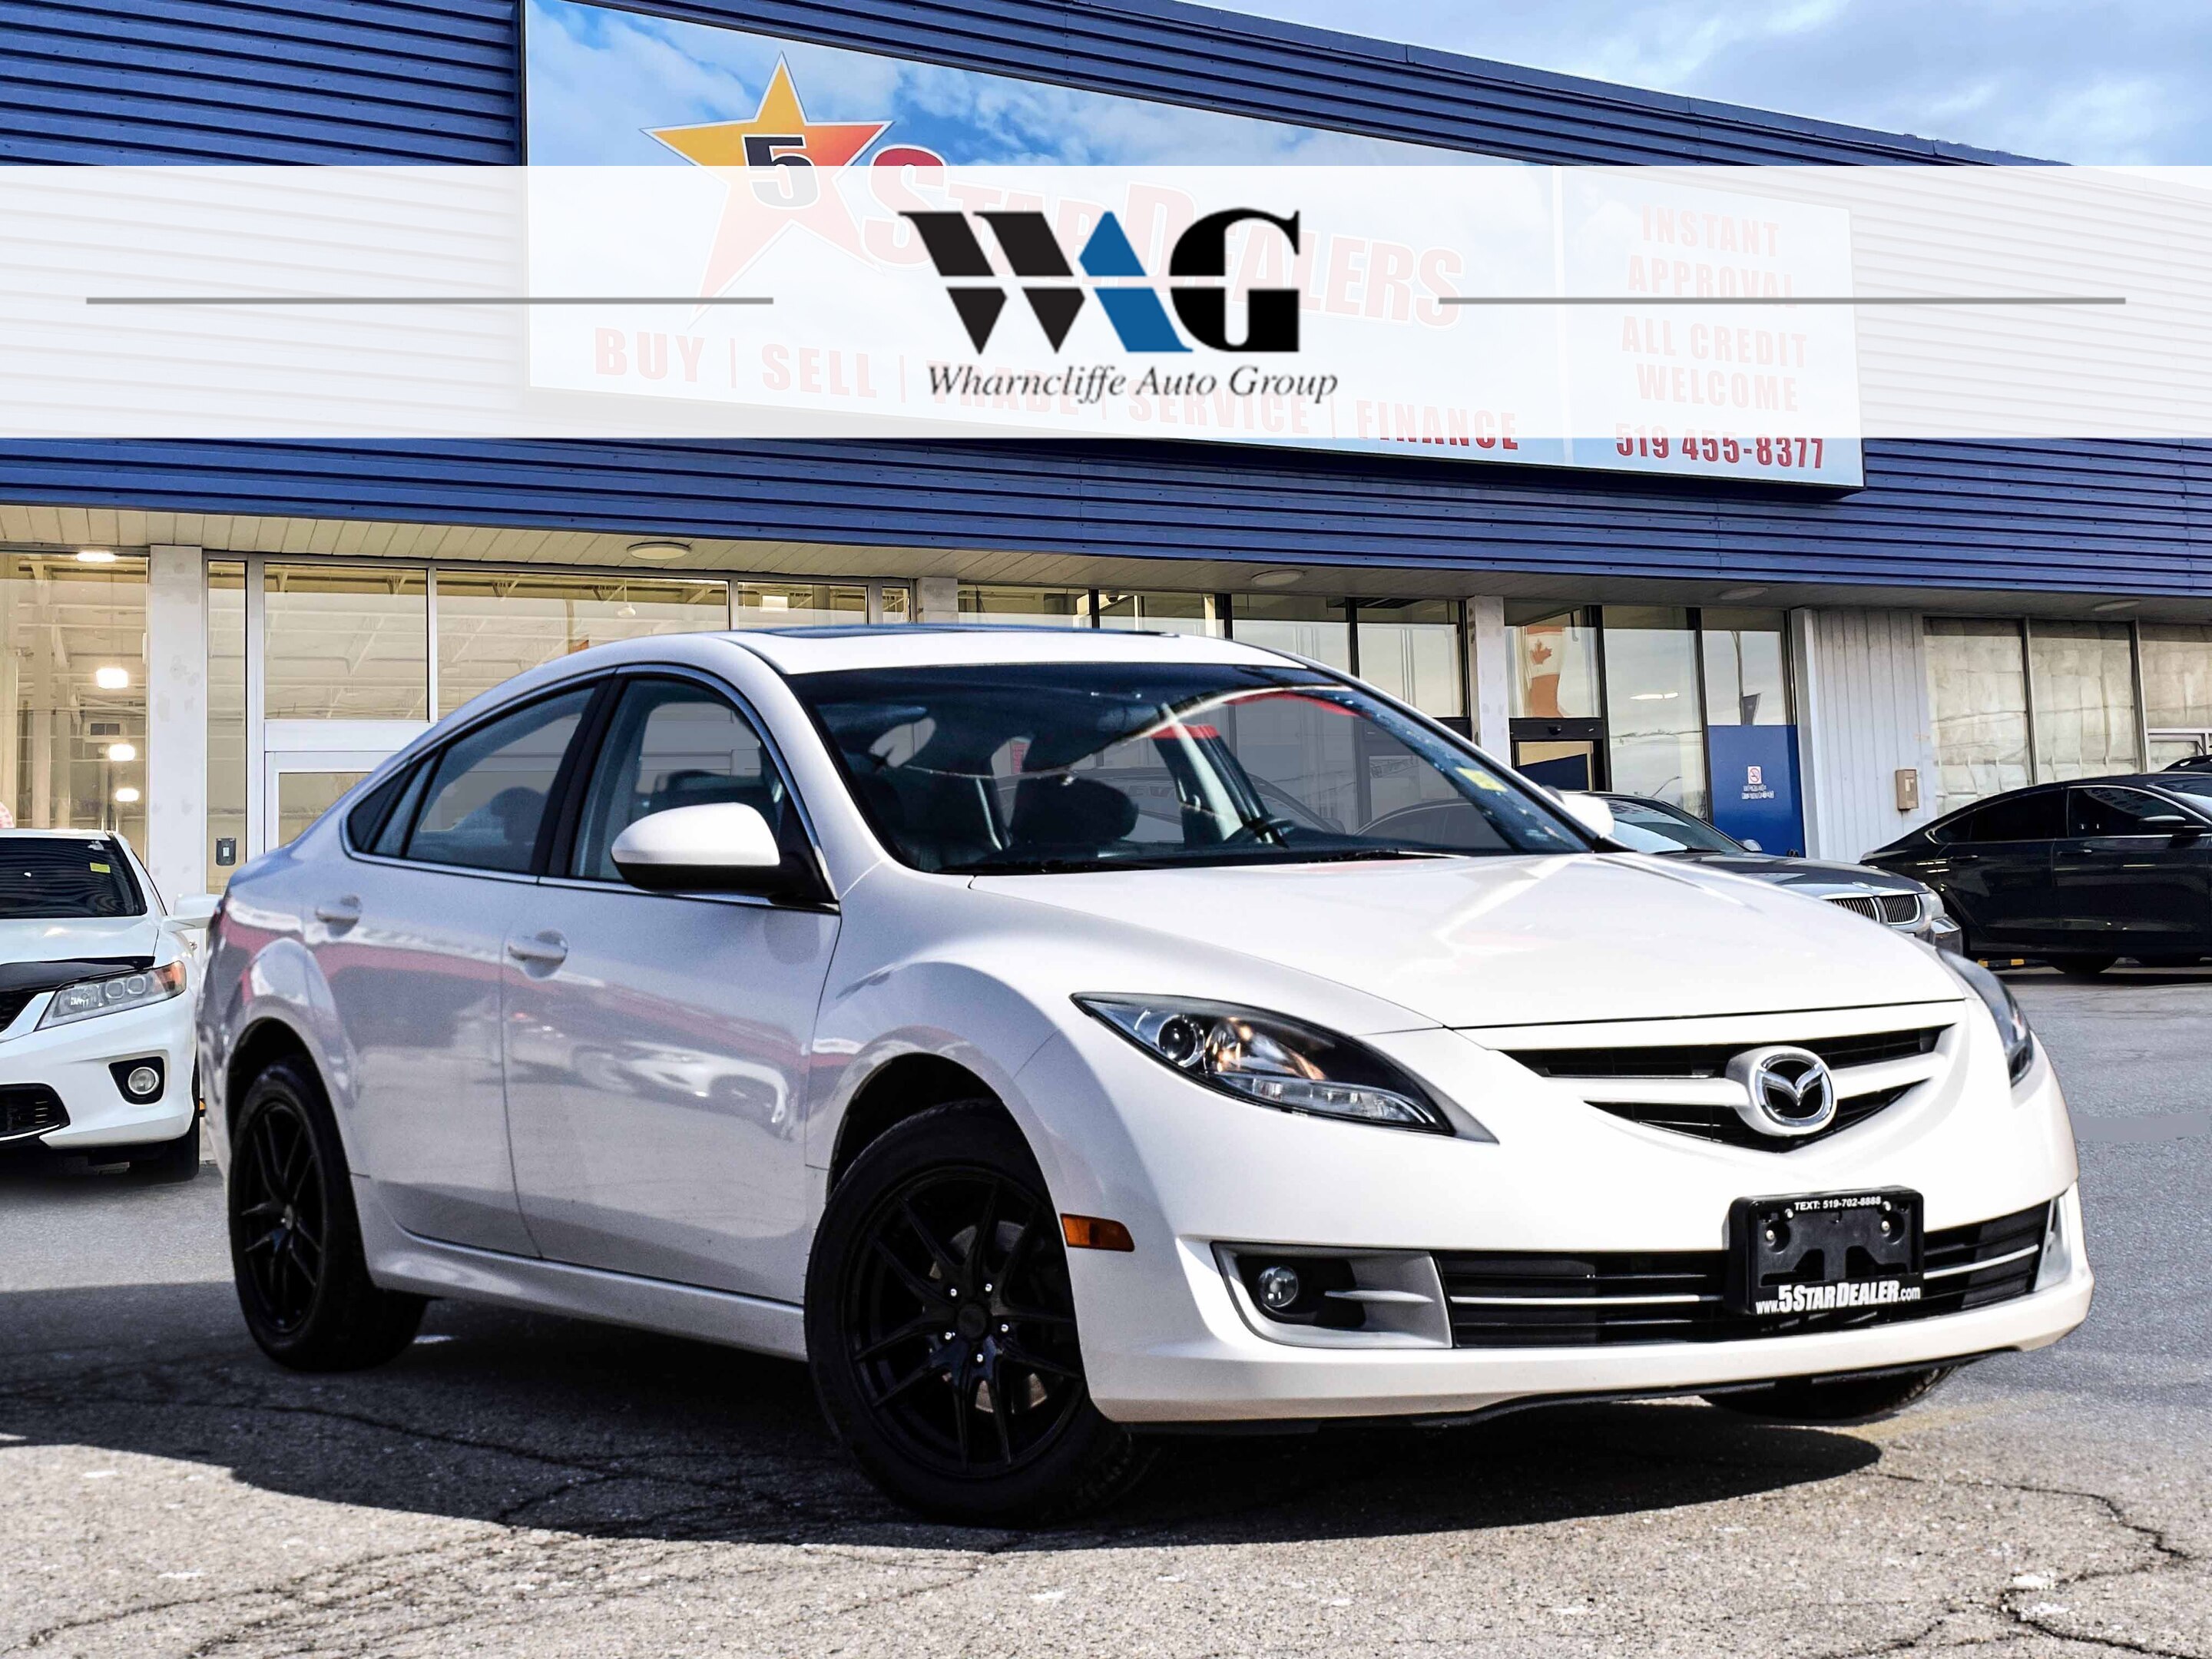 2013 Mazda Mazda6 LEATHER SUNROOF MINT! WE FINANCE ALL CREDIT!